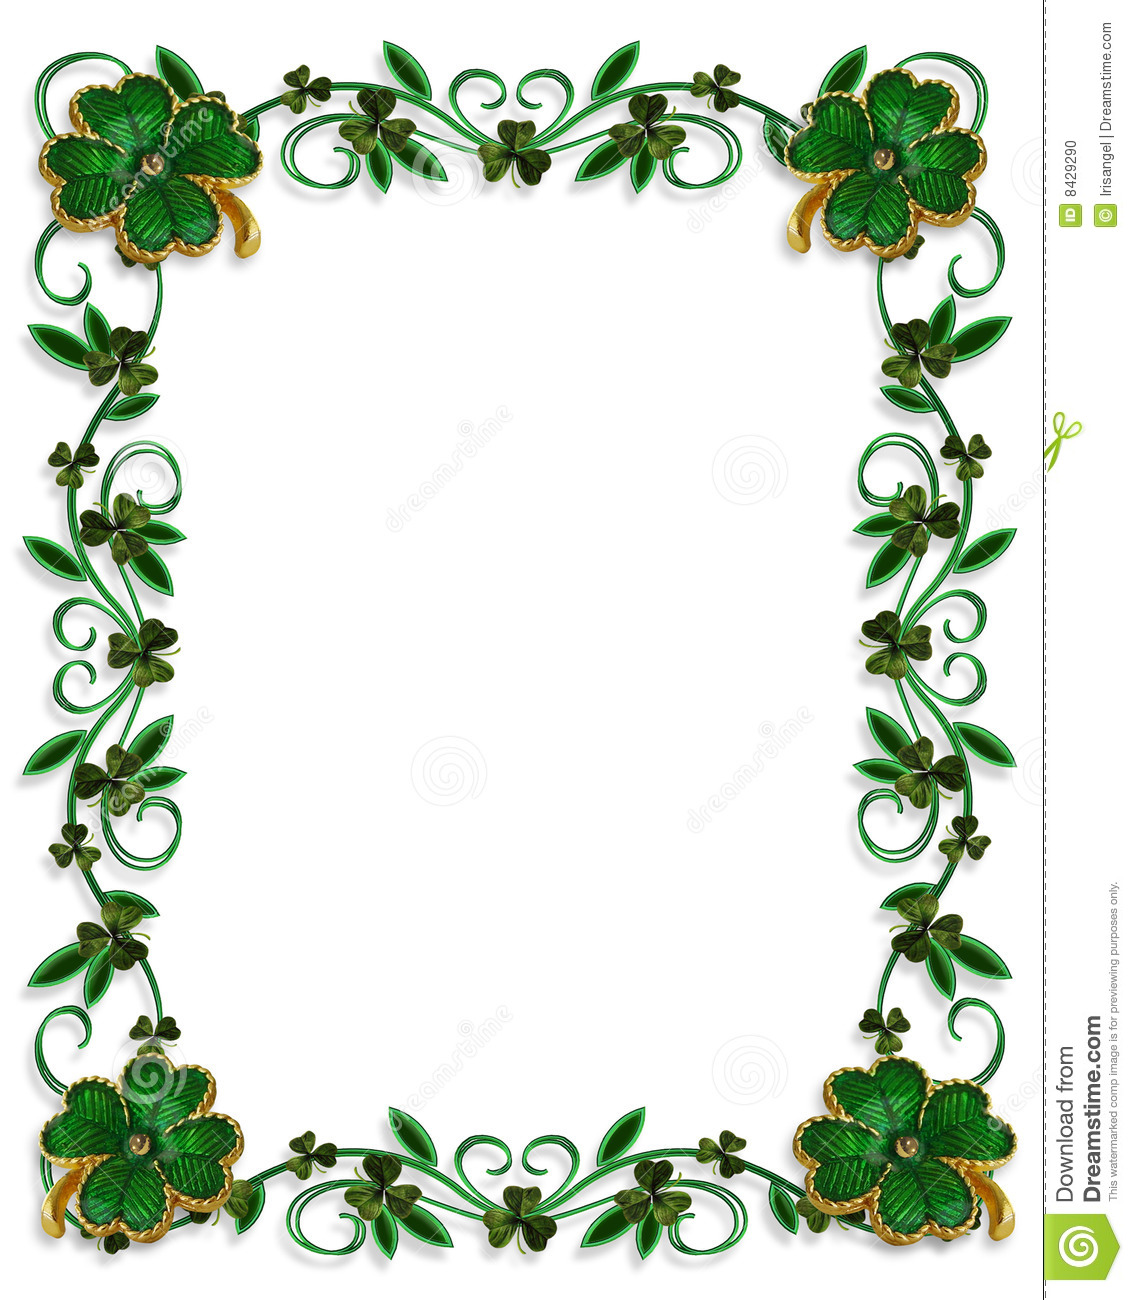 3d Illustration For St Patricks Day Card Background Border Or Frame